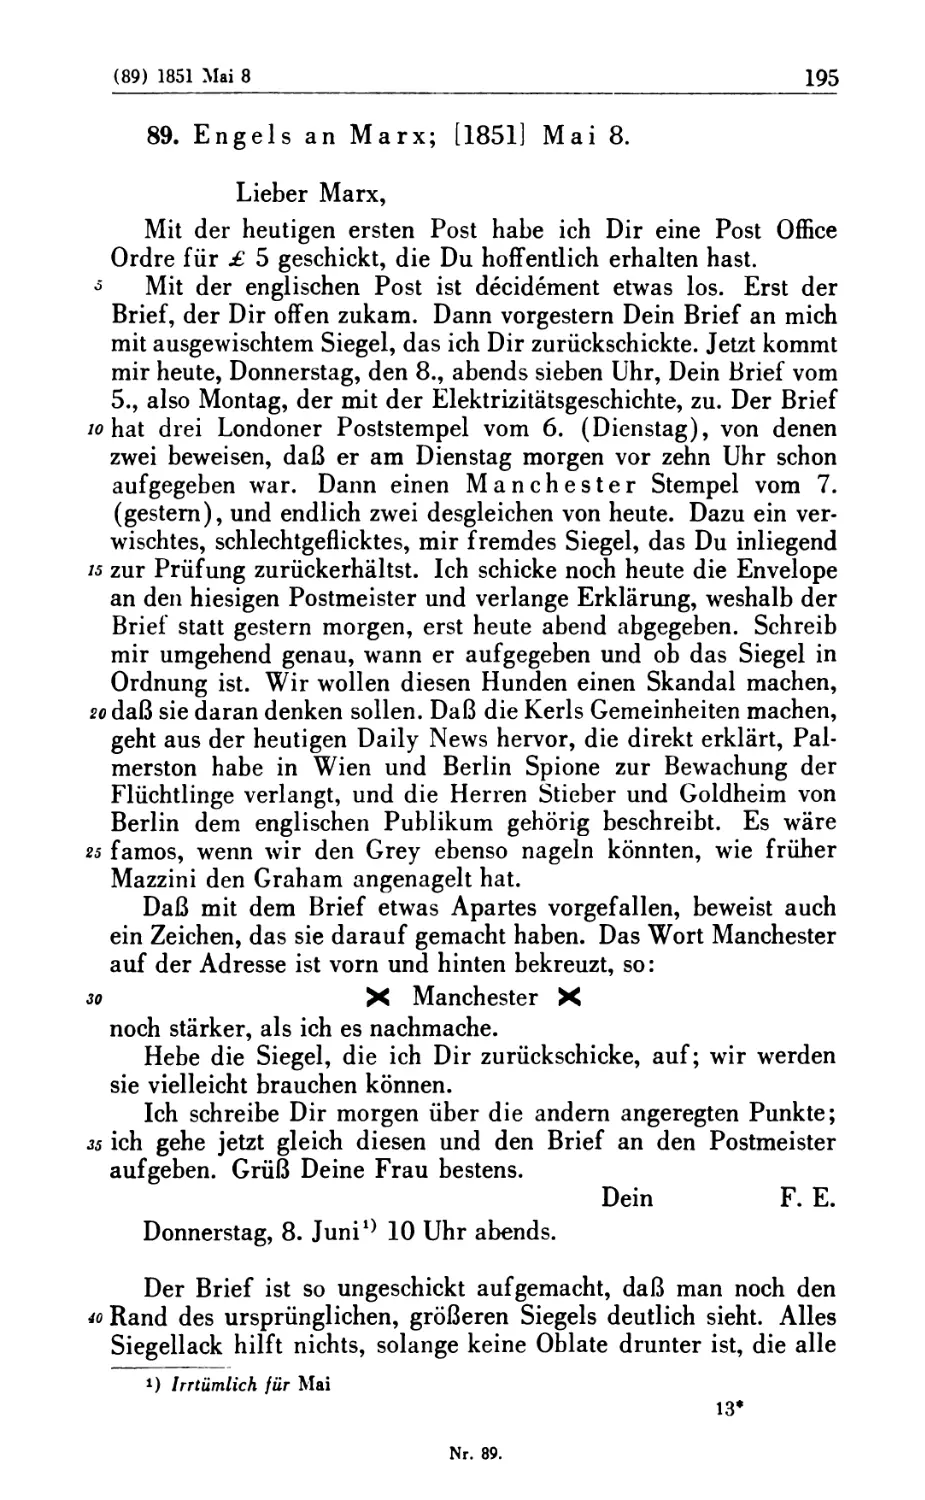 89. Engels an Marx; [1851] Mai 8